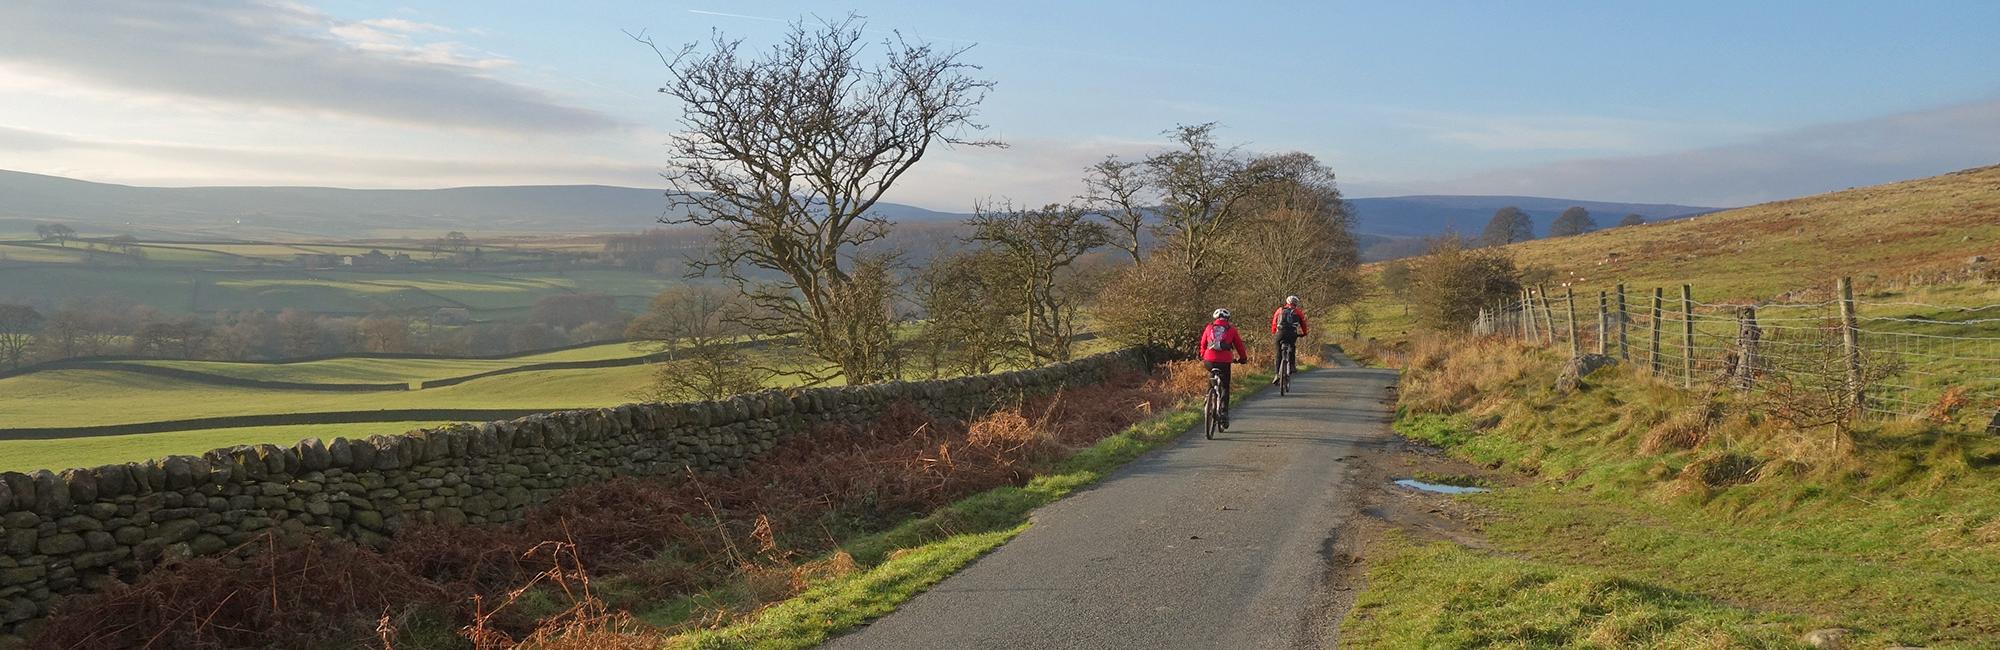 Yorkshire Dales Cycleway with UK Bike Tours (c)Tejvan Pettinger